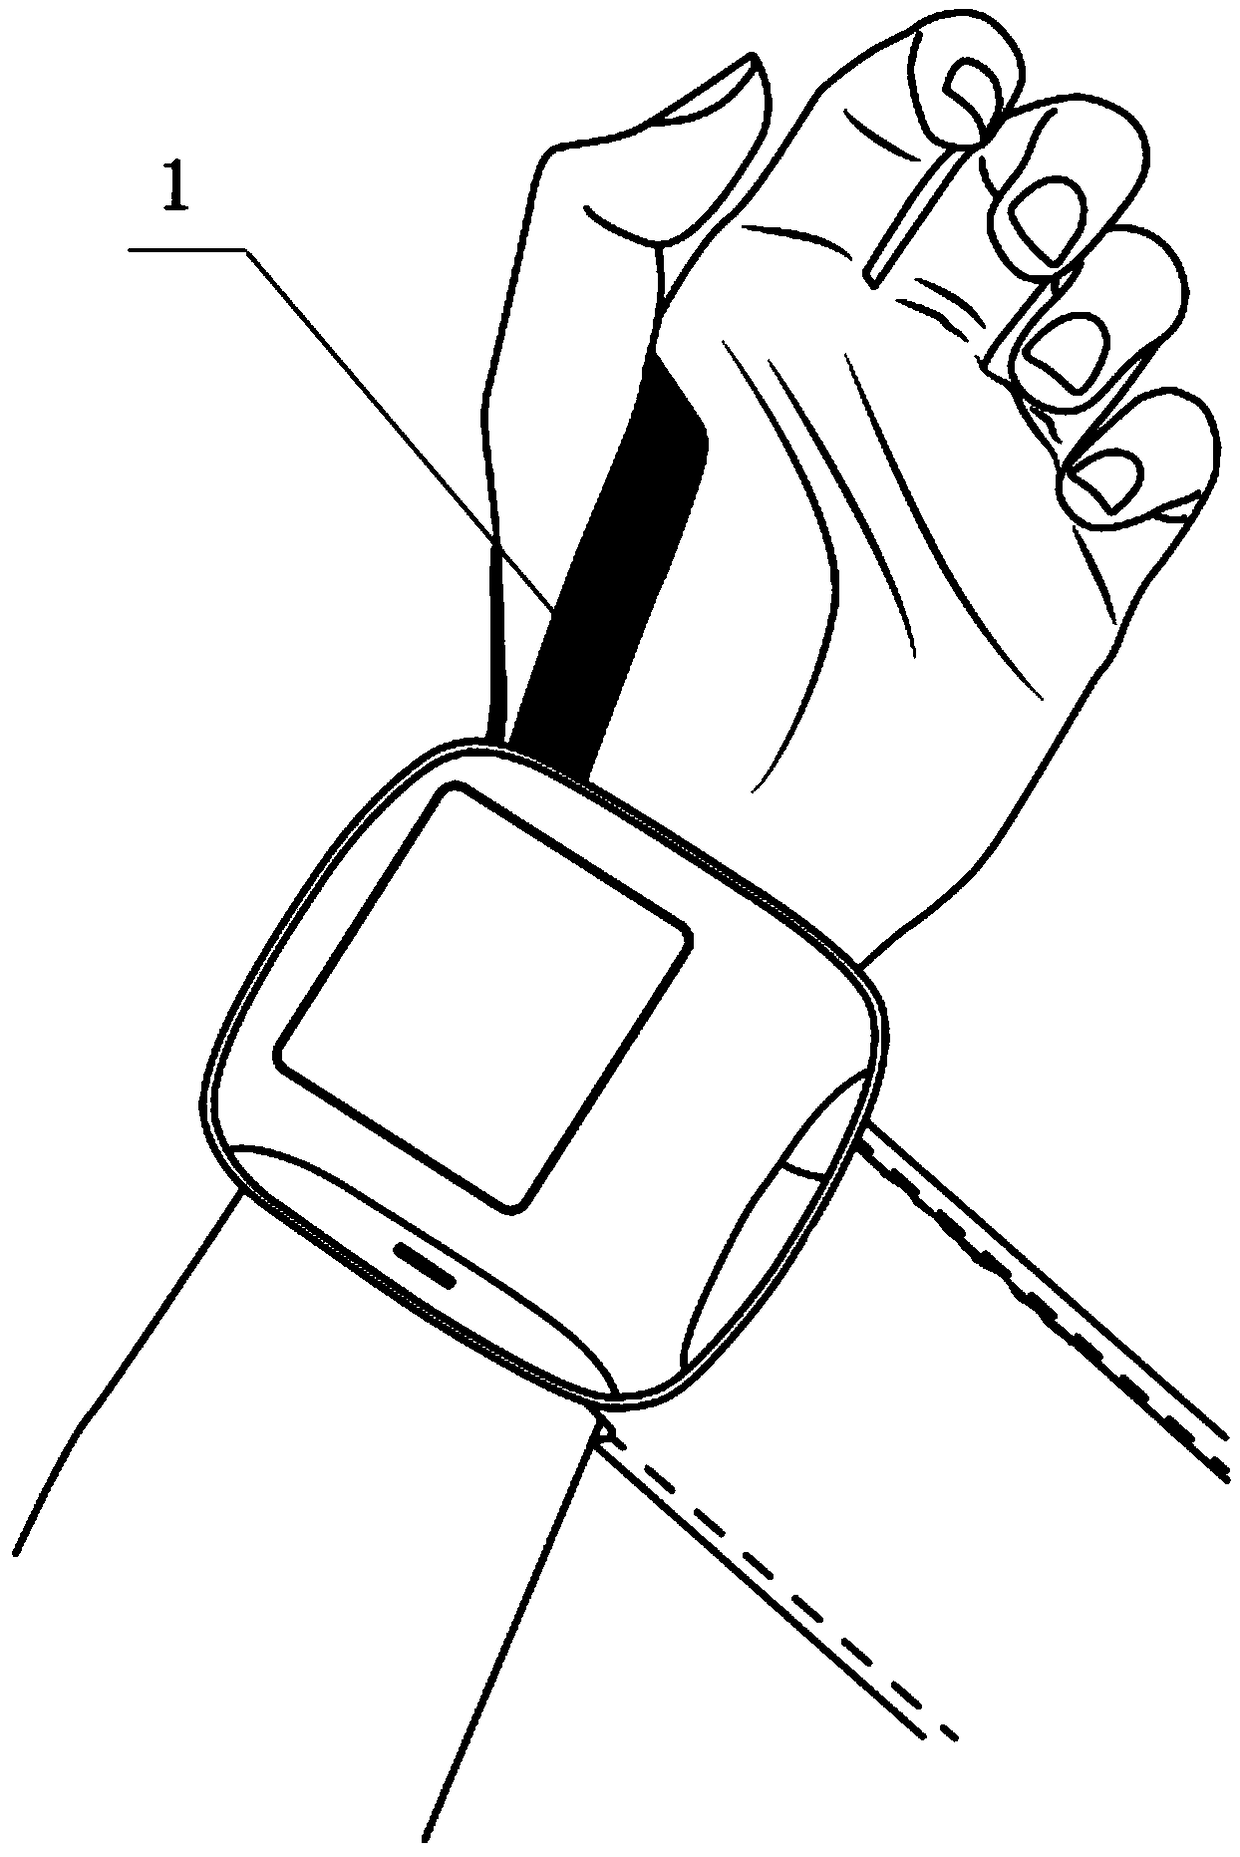 Wrist electronic sphygmomanometer hand strap